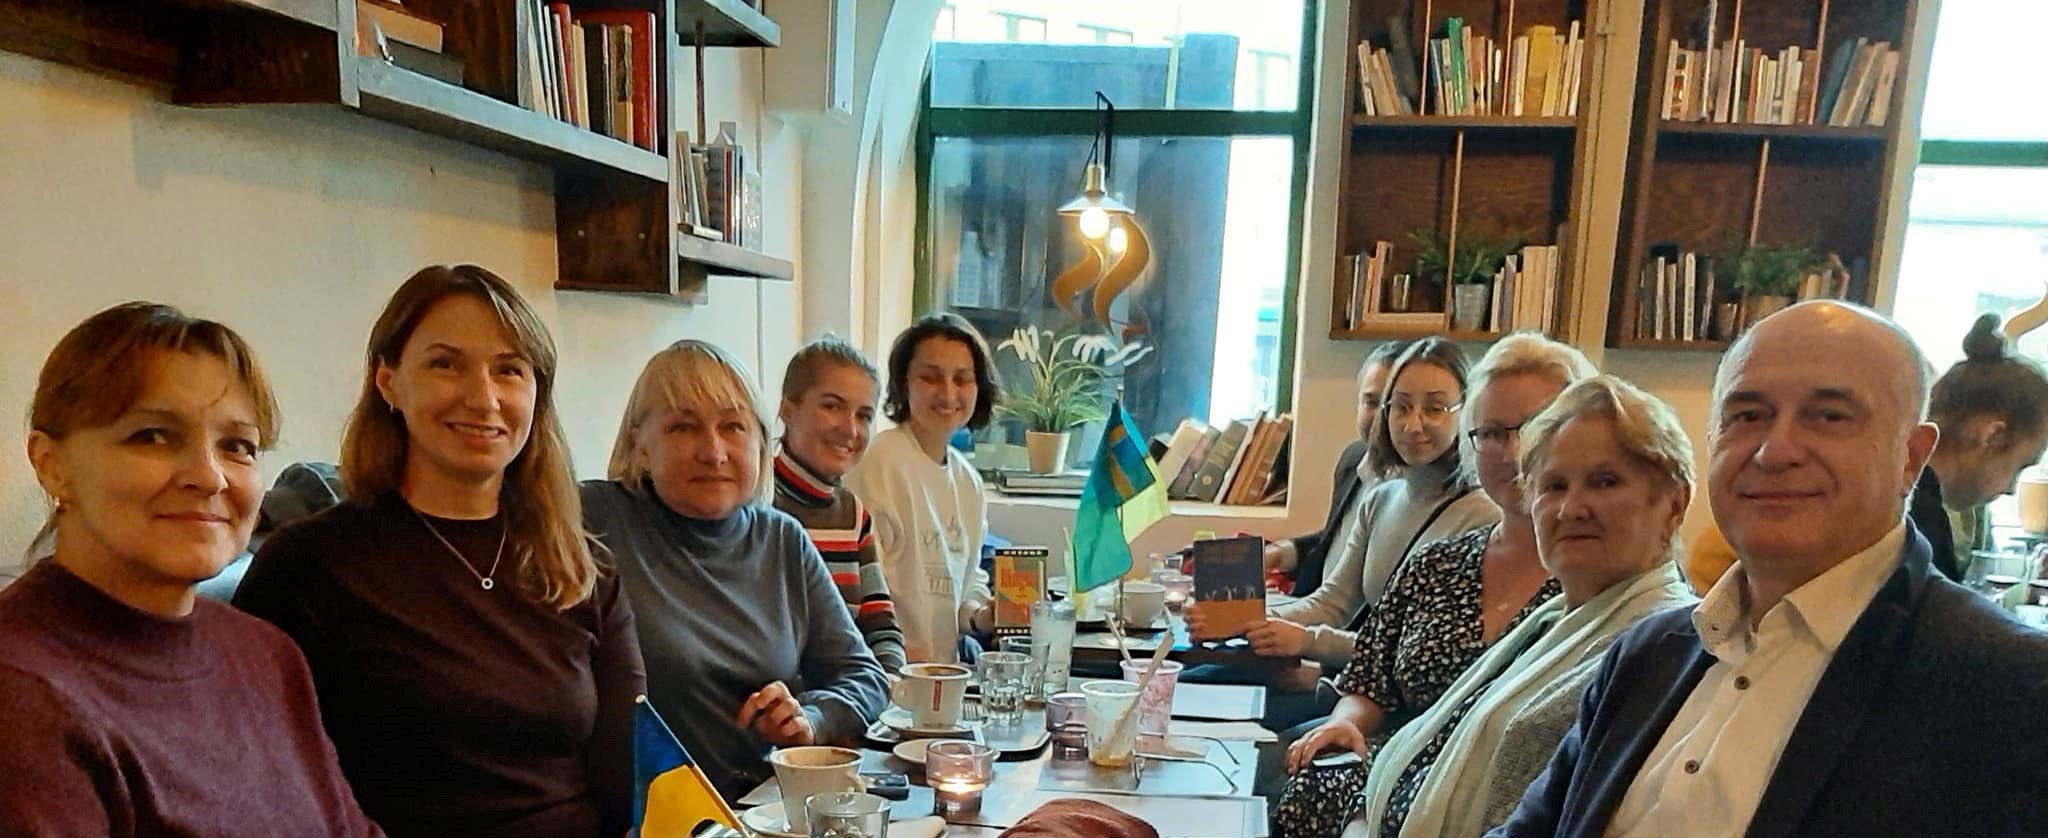 Українська громада у місті Гетеборг / Ukrainska sällskapet i Göteborg